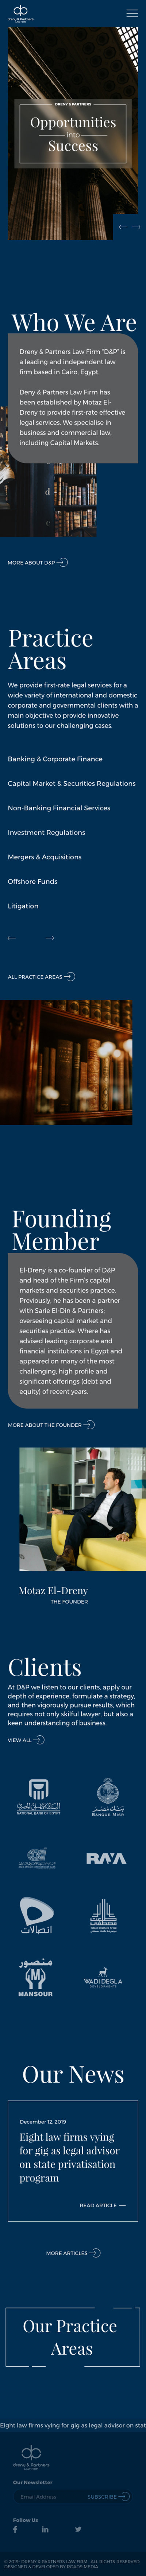 Dreny & Partners Law Firm